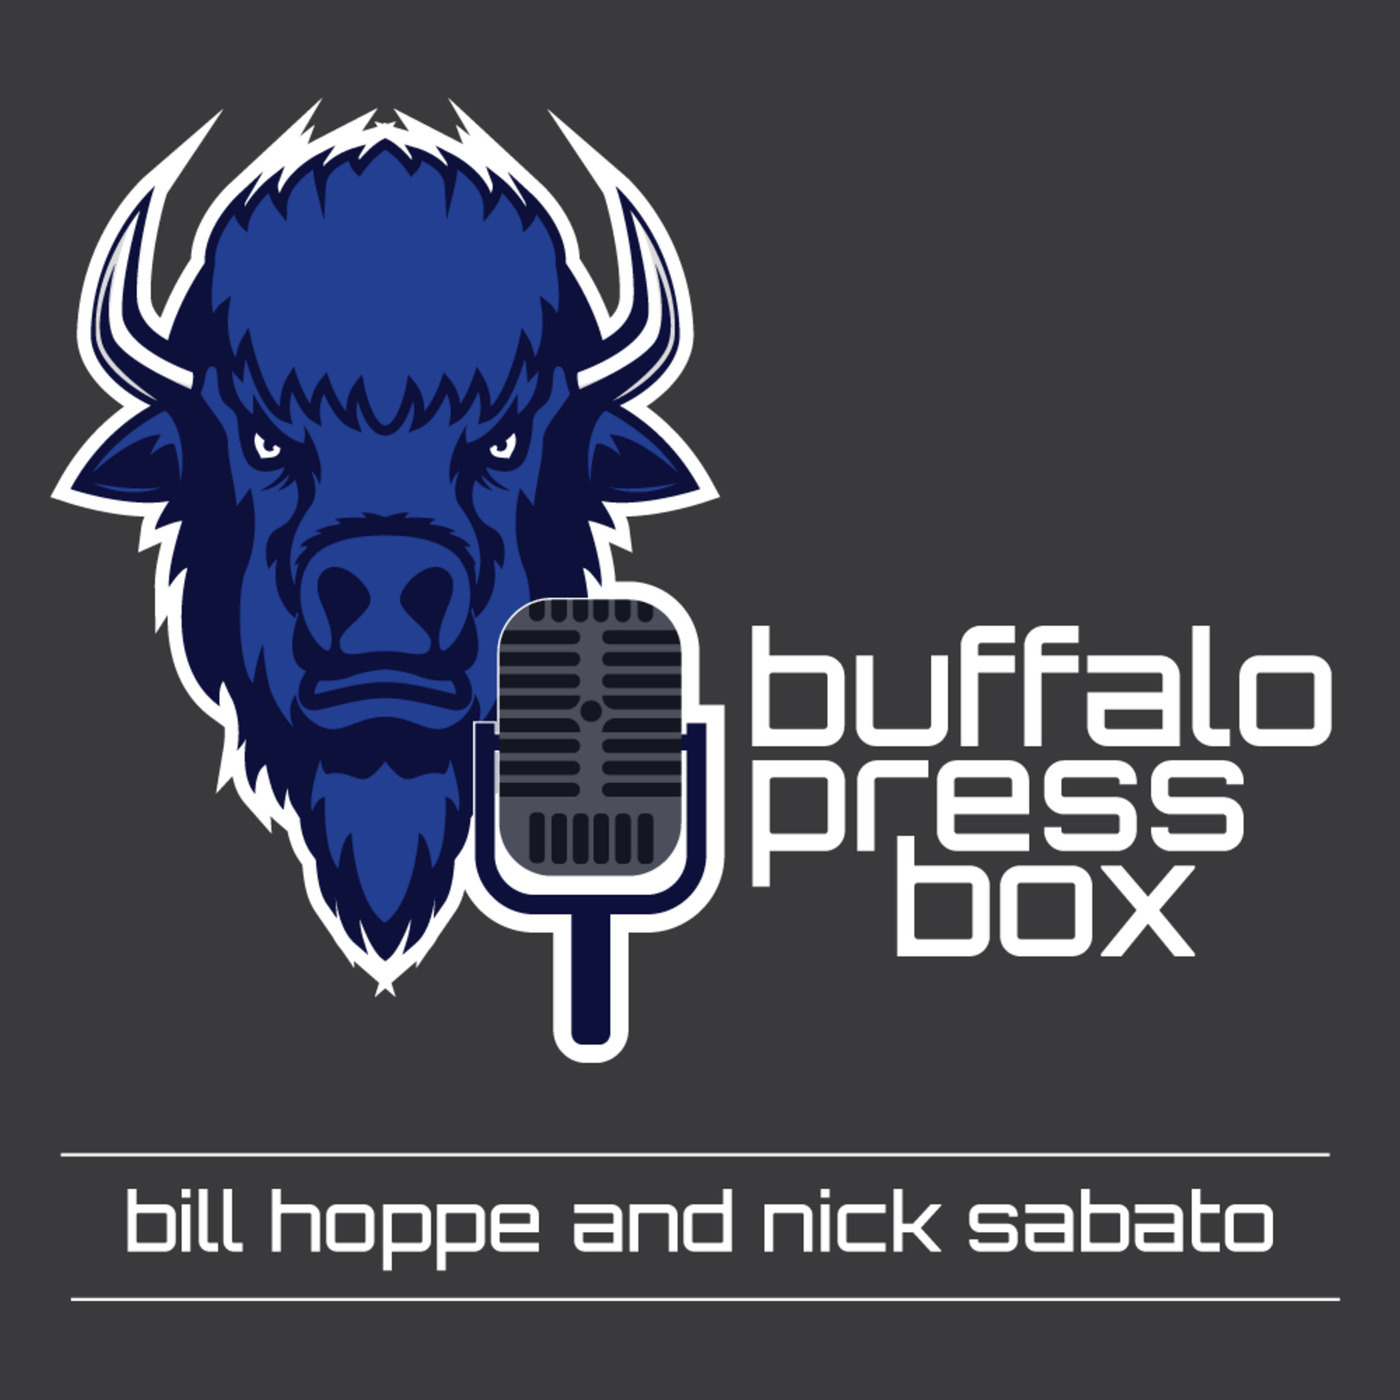 The Buffalo Press Box 3: Buffalo Press Box